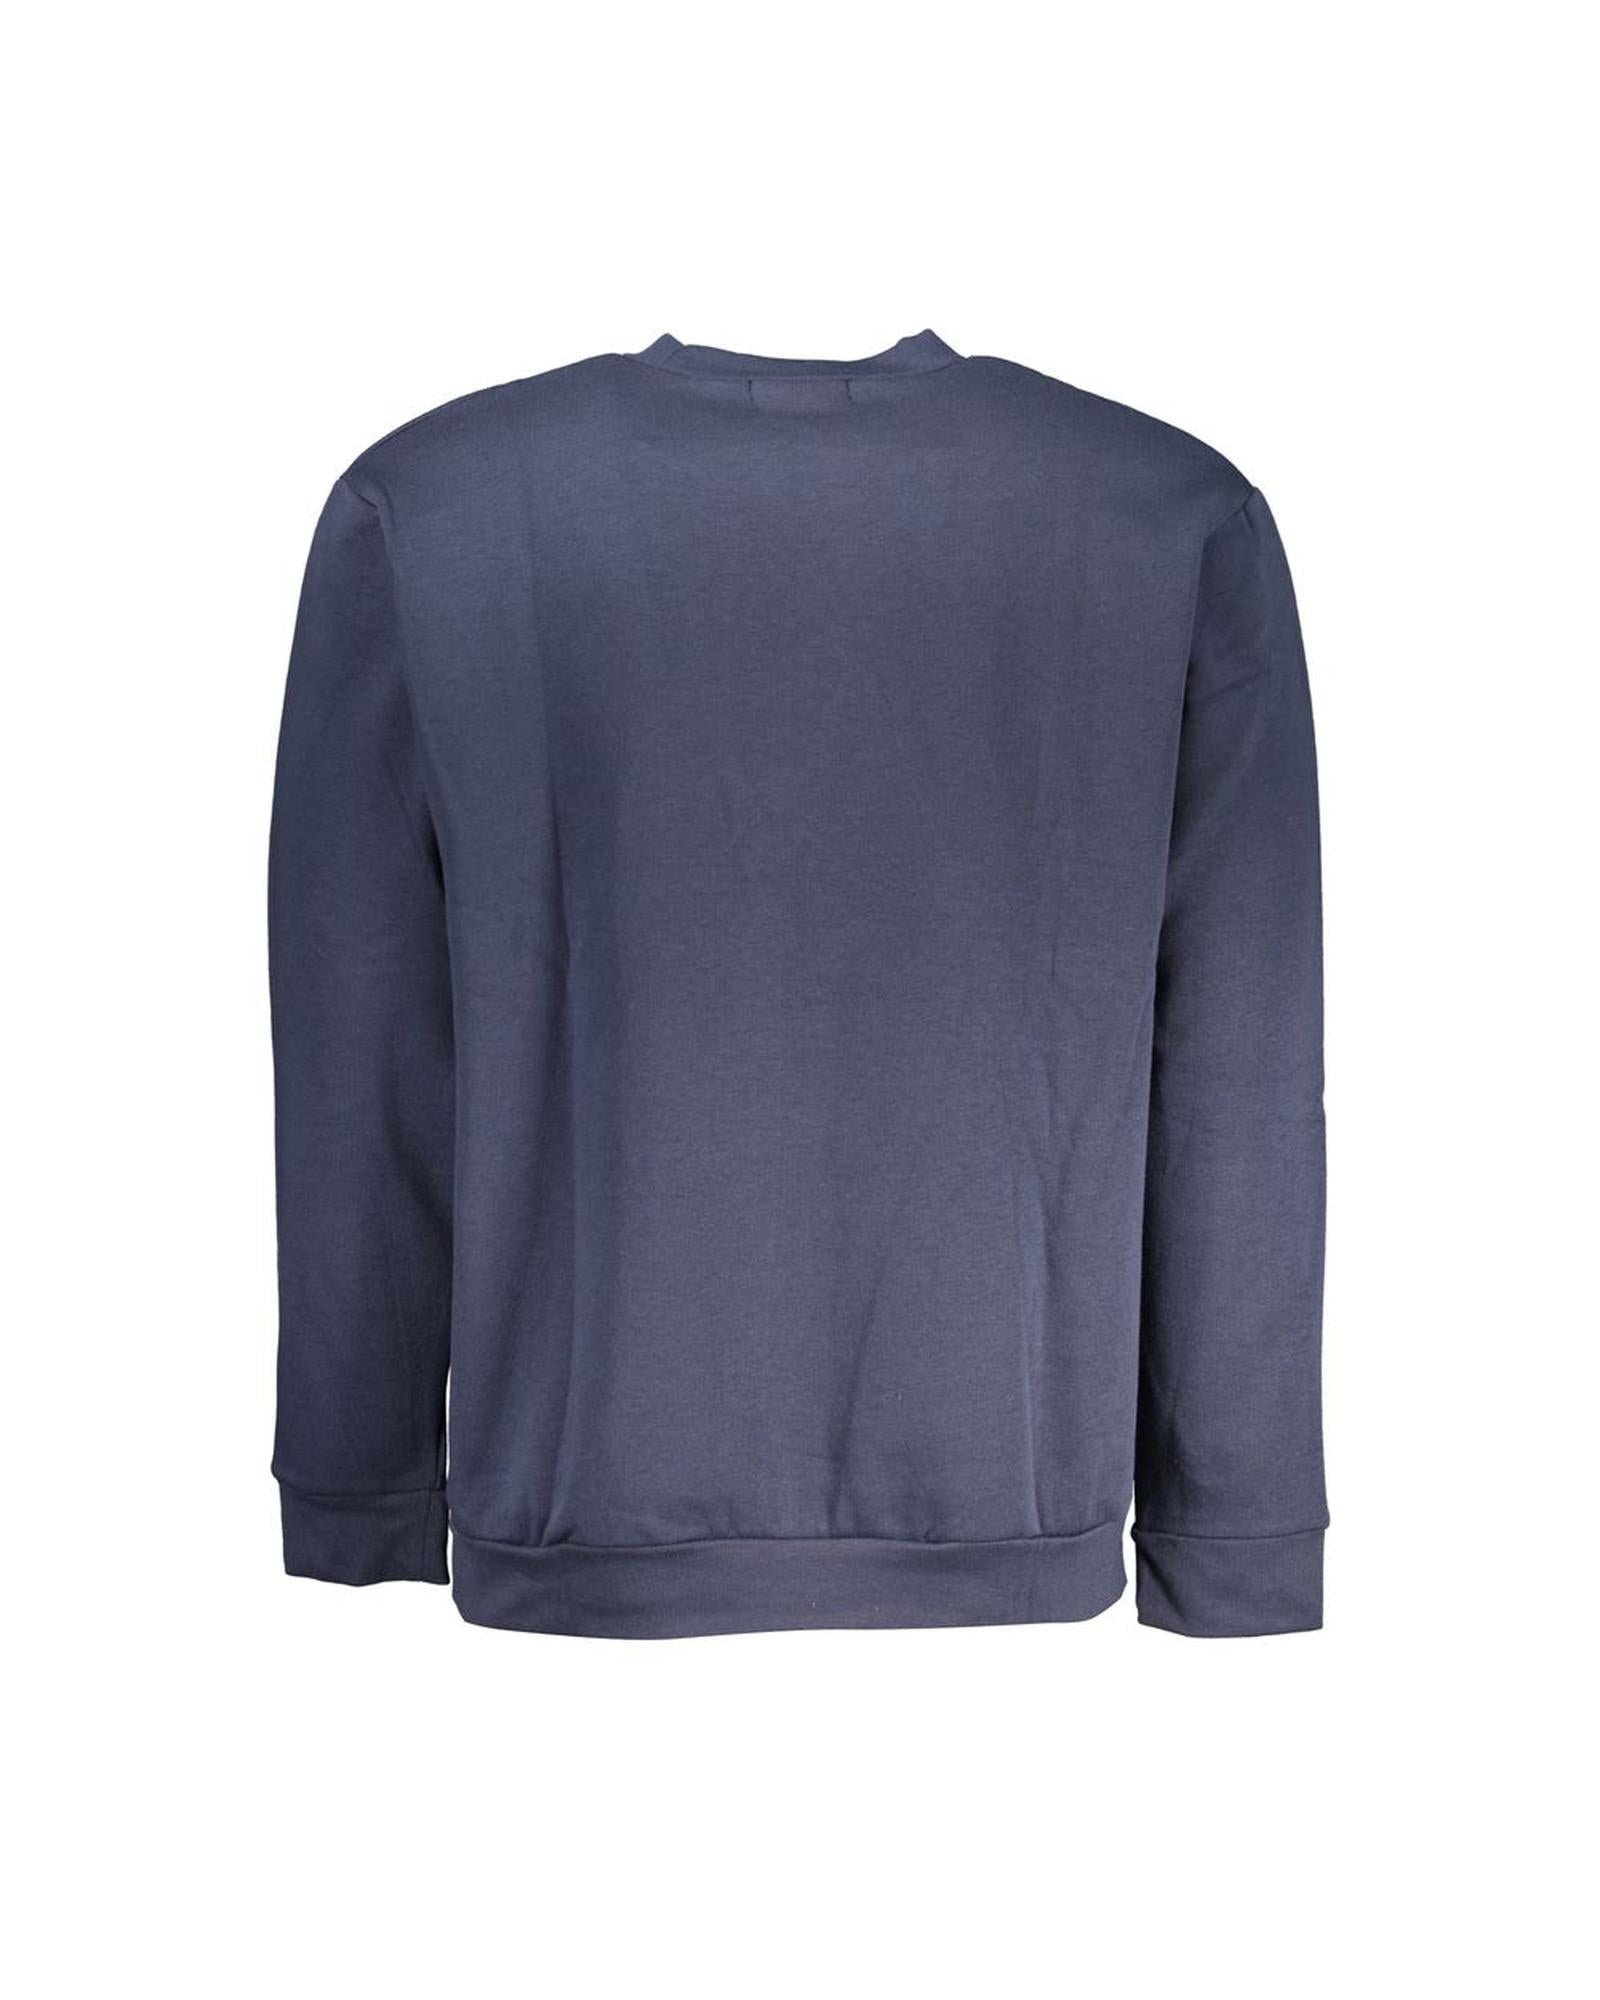 Vibrant Blue/Black Cotton Sweater - Cavalli Class